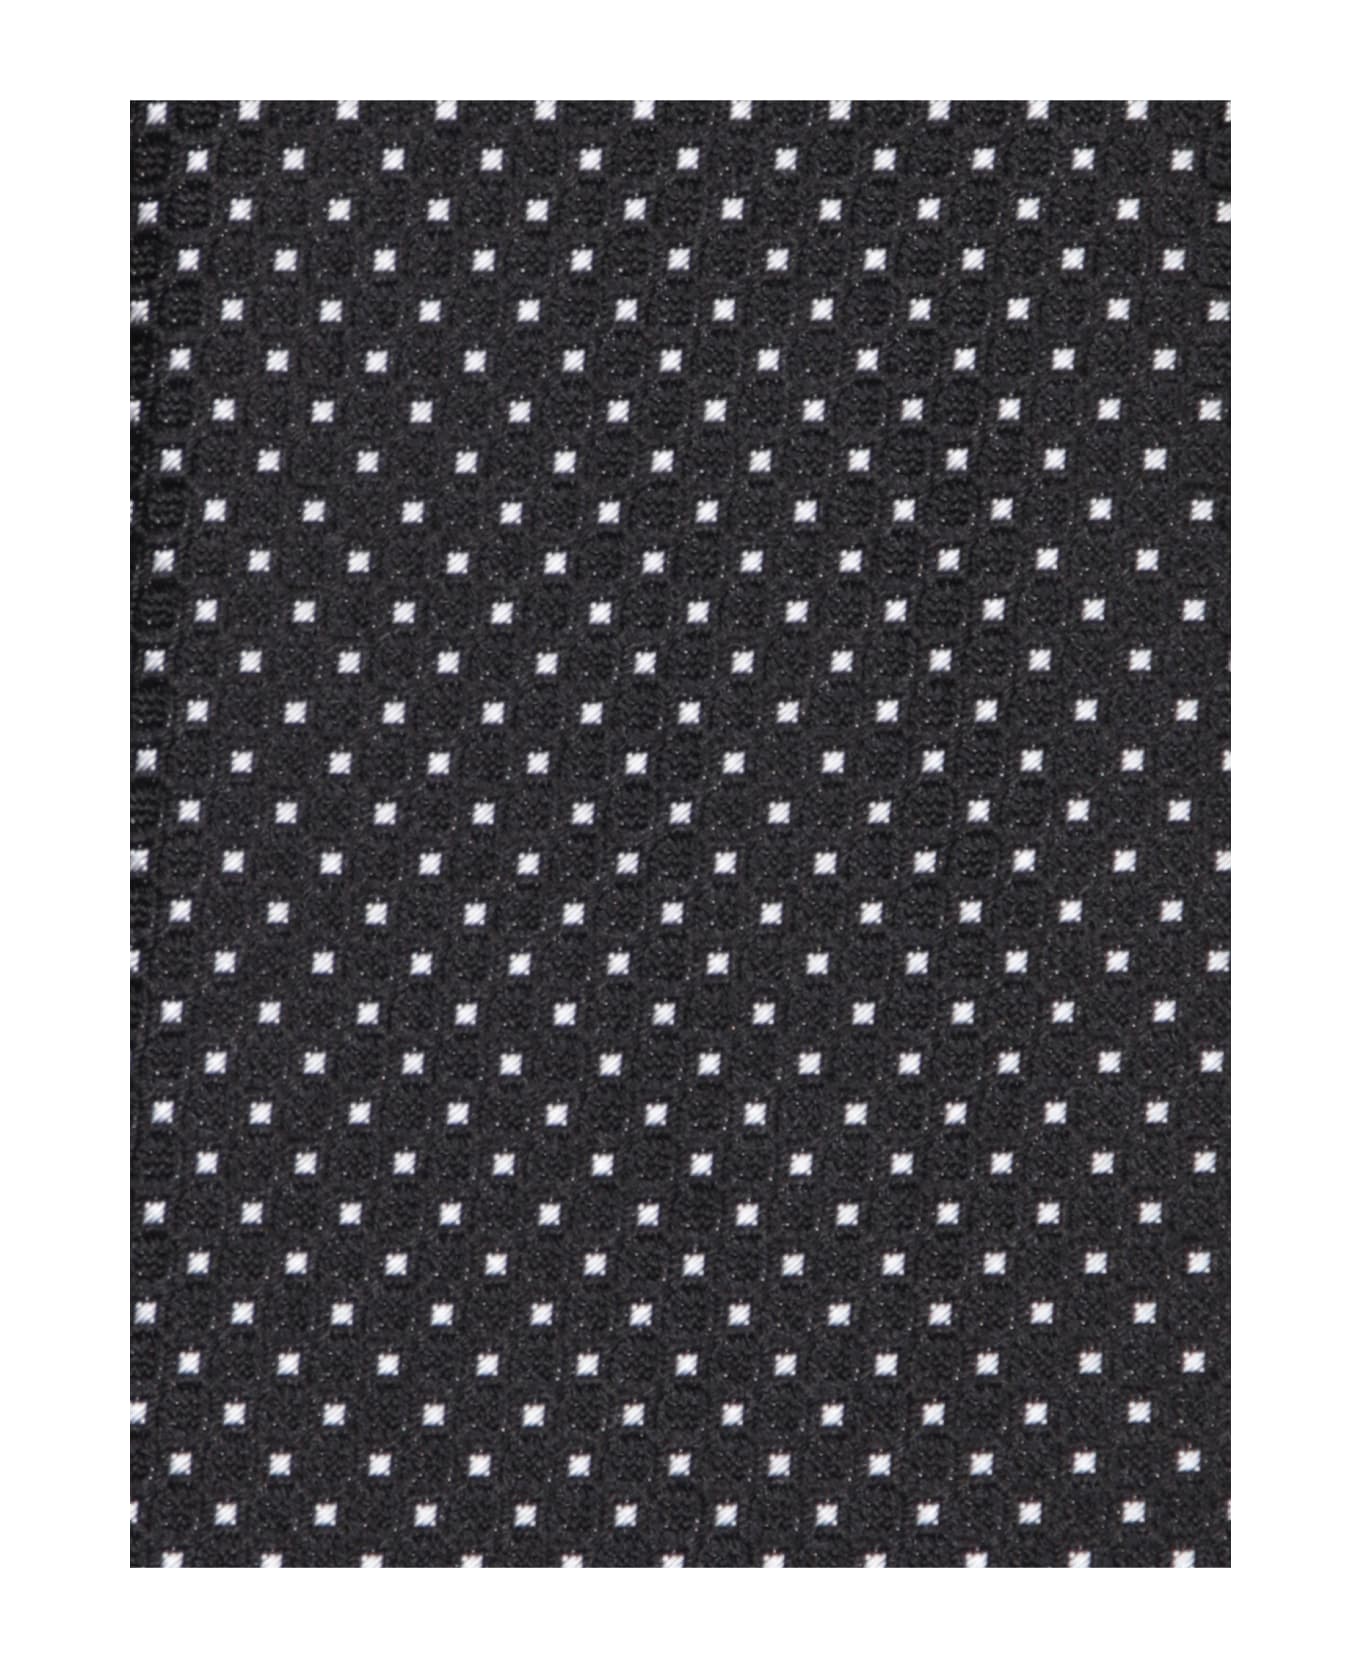 Canali Micropattern Square White/black Tie - Black